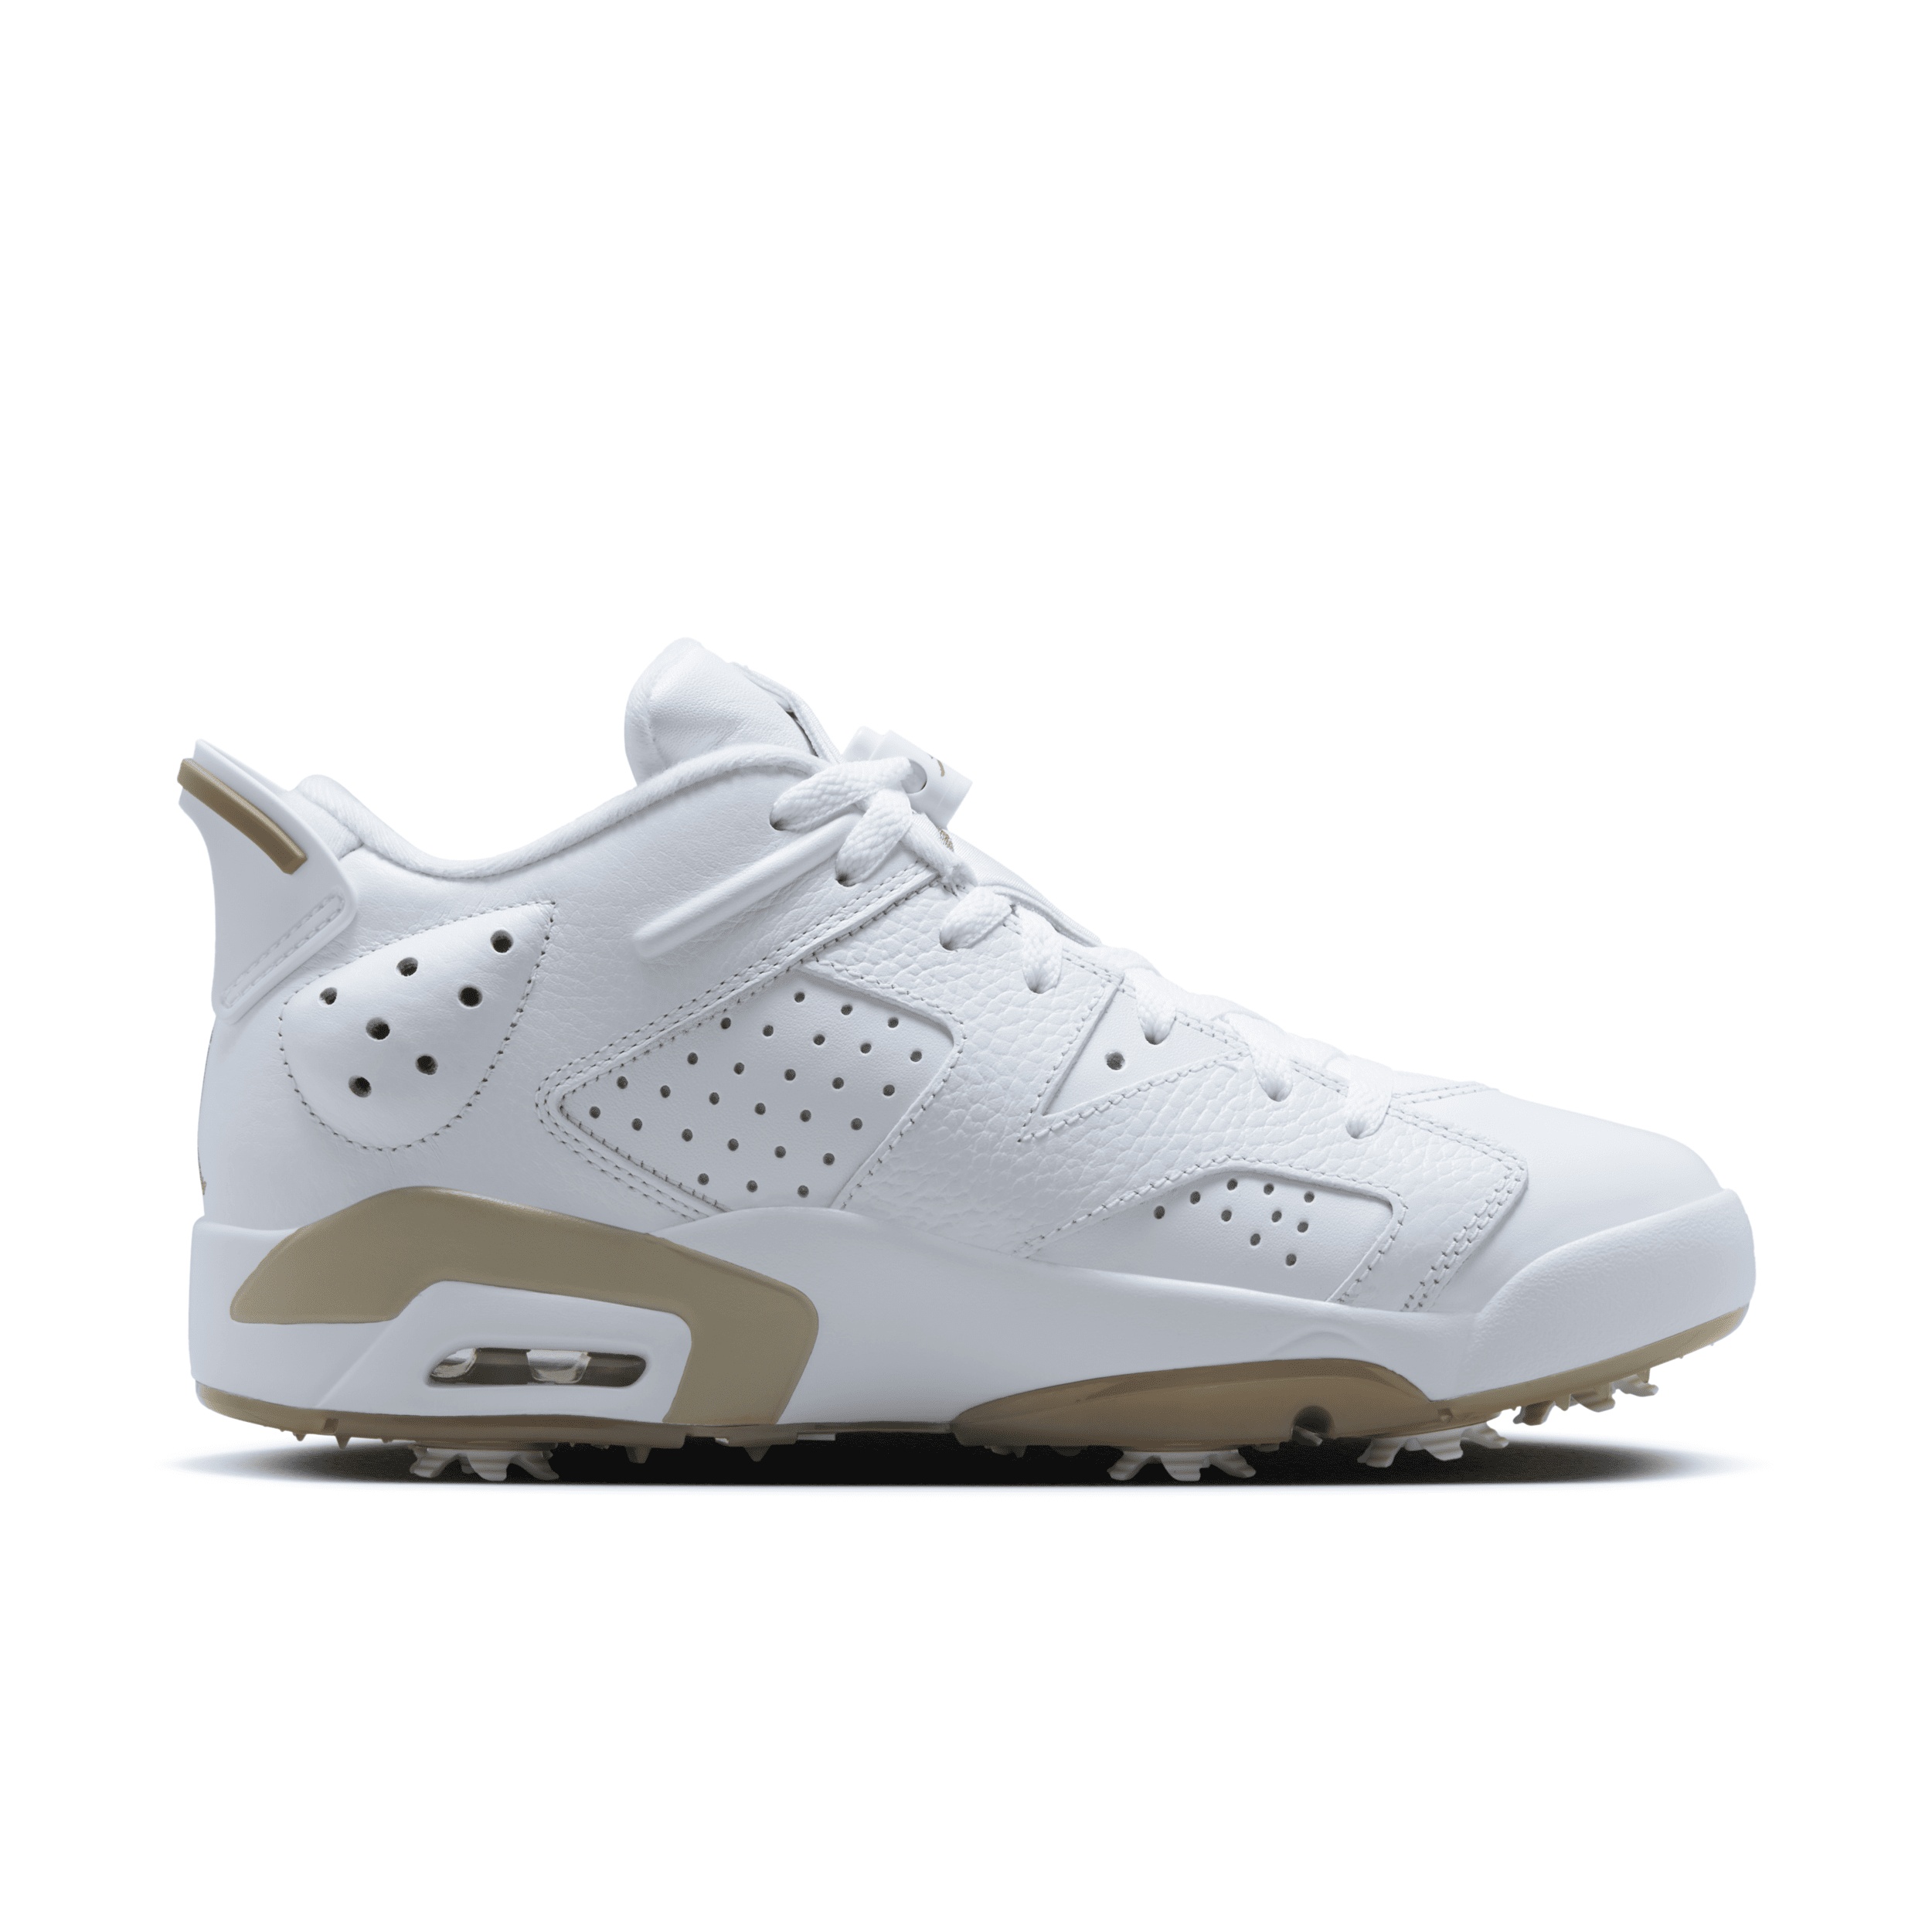 Men's Jordan Retro 6 G Golf Shoes - 3